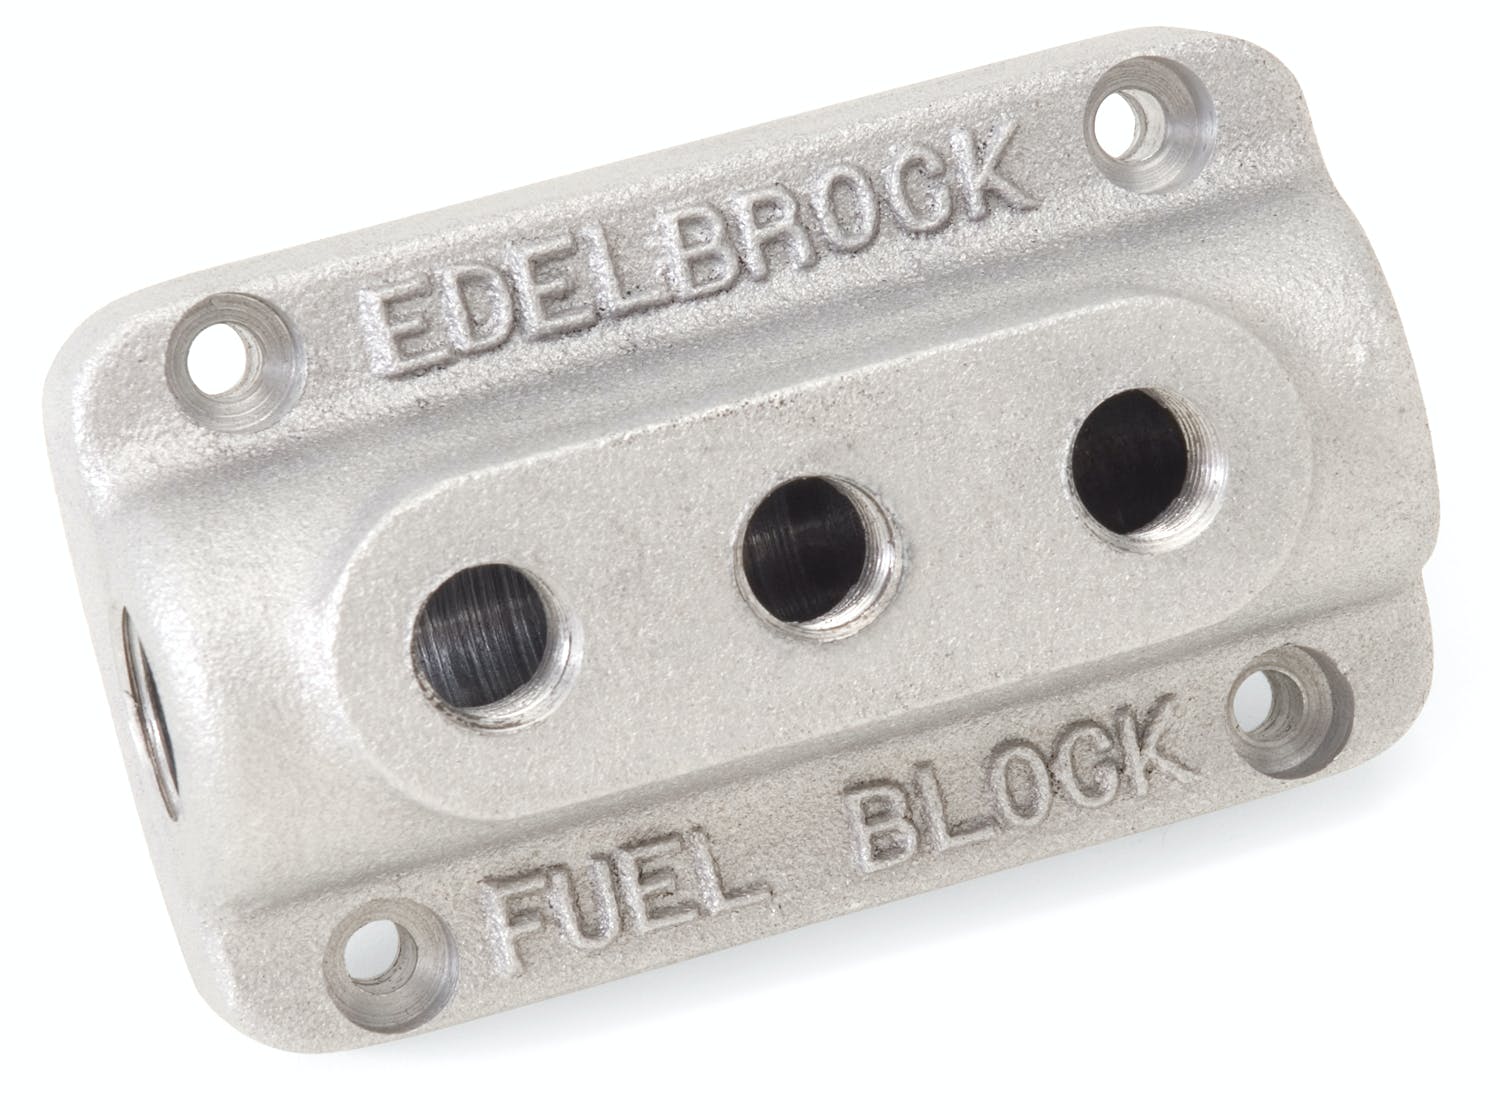 Edelbrock 1285 FUEL BLOCK TRIPLE AS CAST